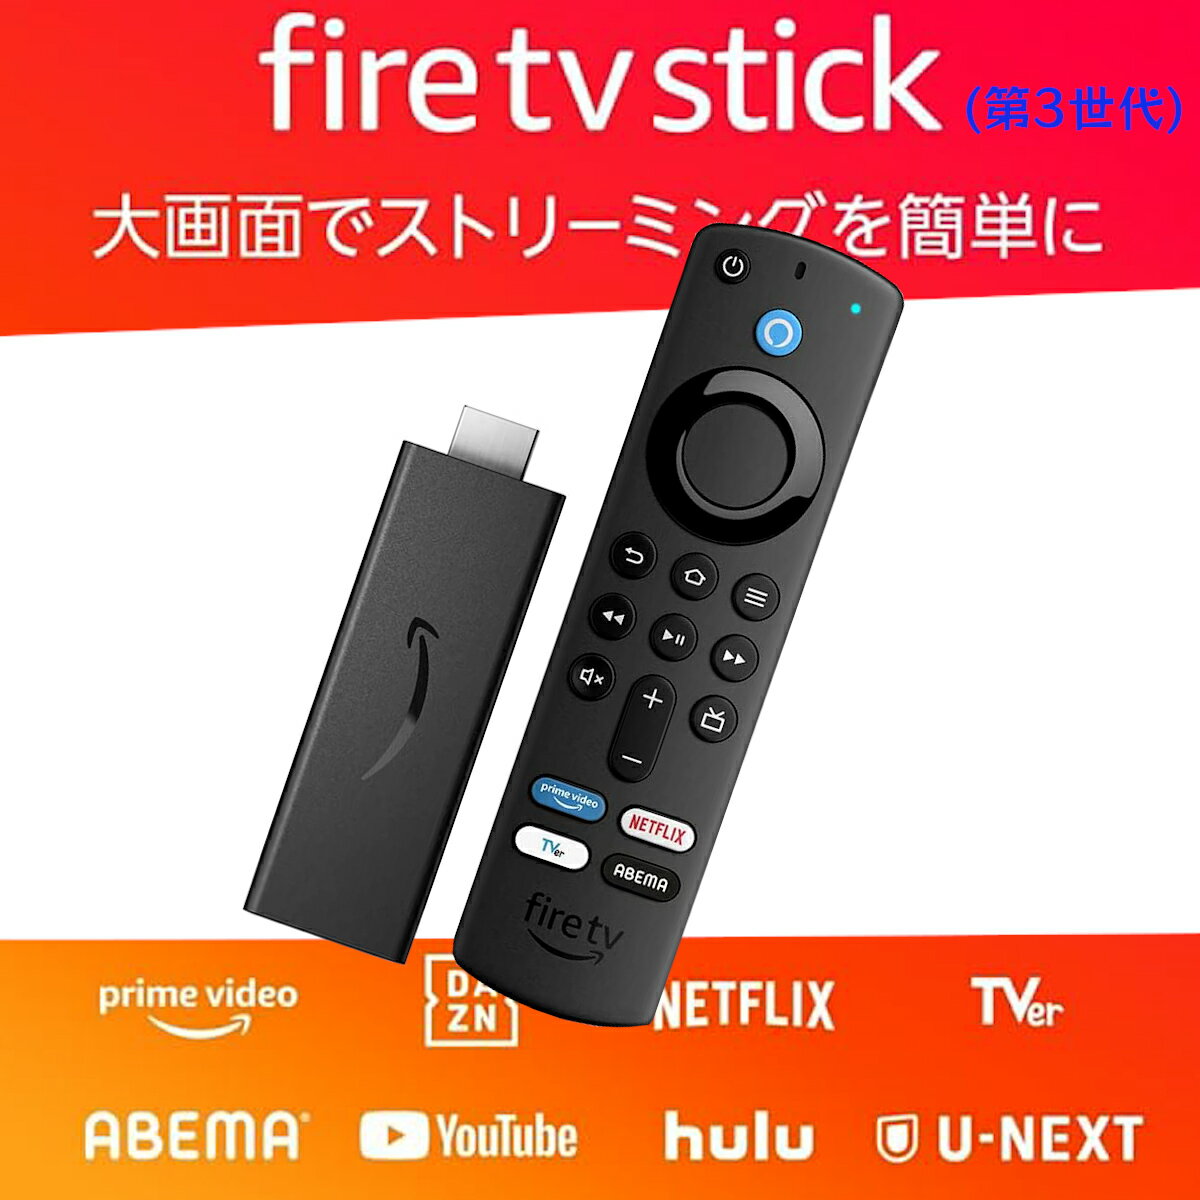 amazon fire tvXeBbN stick R 3 A}] t@CA[XeBbN t@CA[ Fire TV Stick - AlexaΉF R (3)t Xg[~OfBAv[[